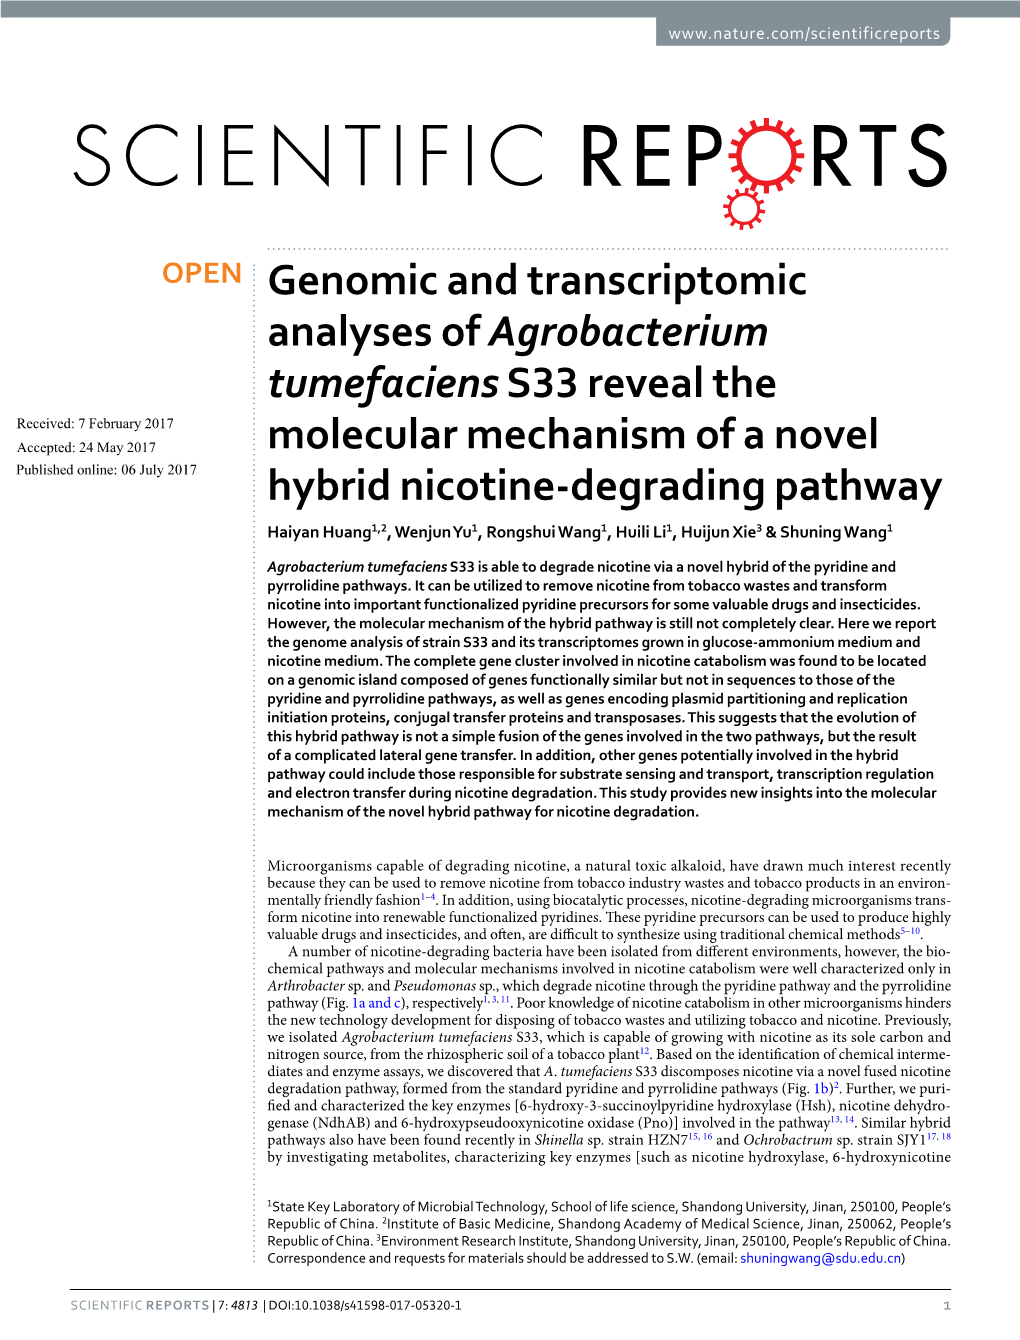 Genomic and Transcriptomic Analyses of Agrobacterium Tumefaciens S33